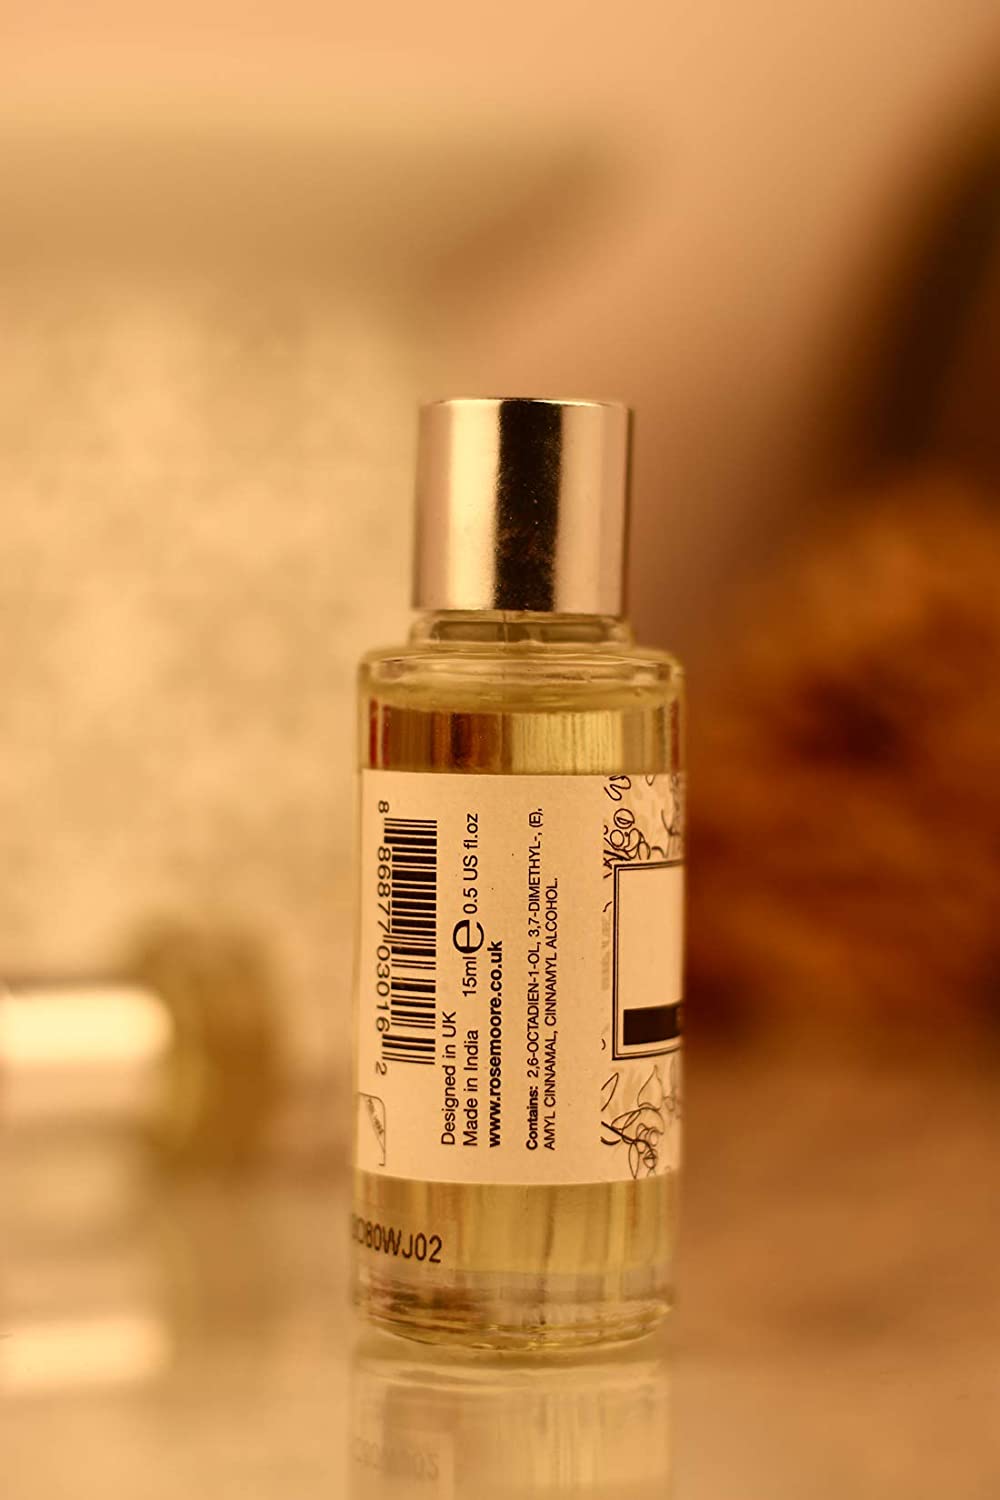 Aromar Egyptian Musk Fragrance Oil (2 fl oz), Delivery Near You